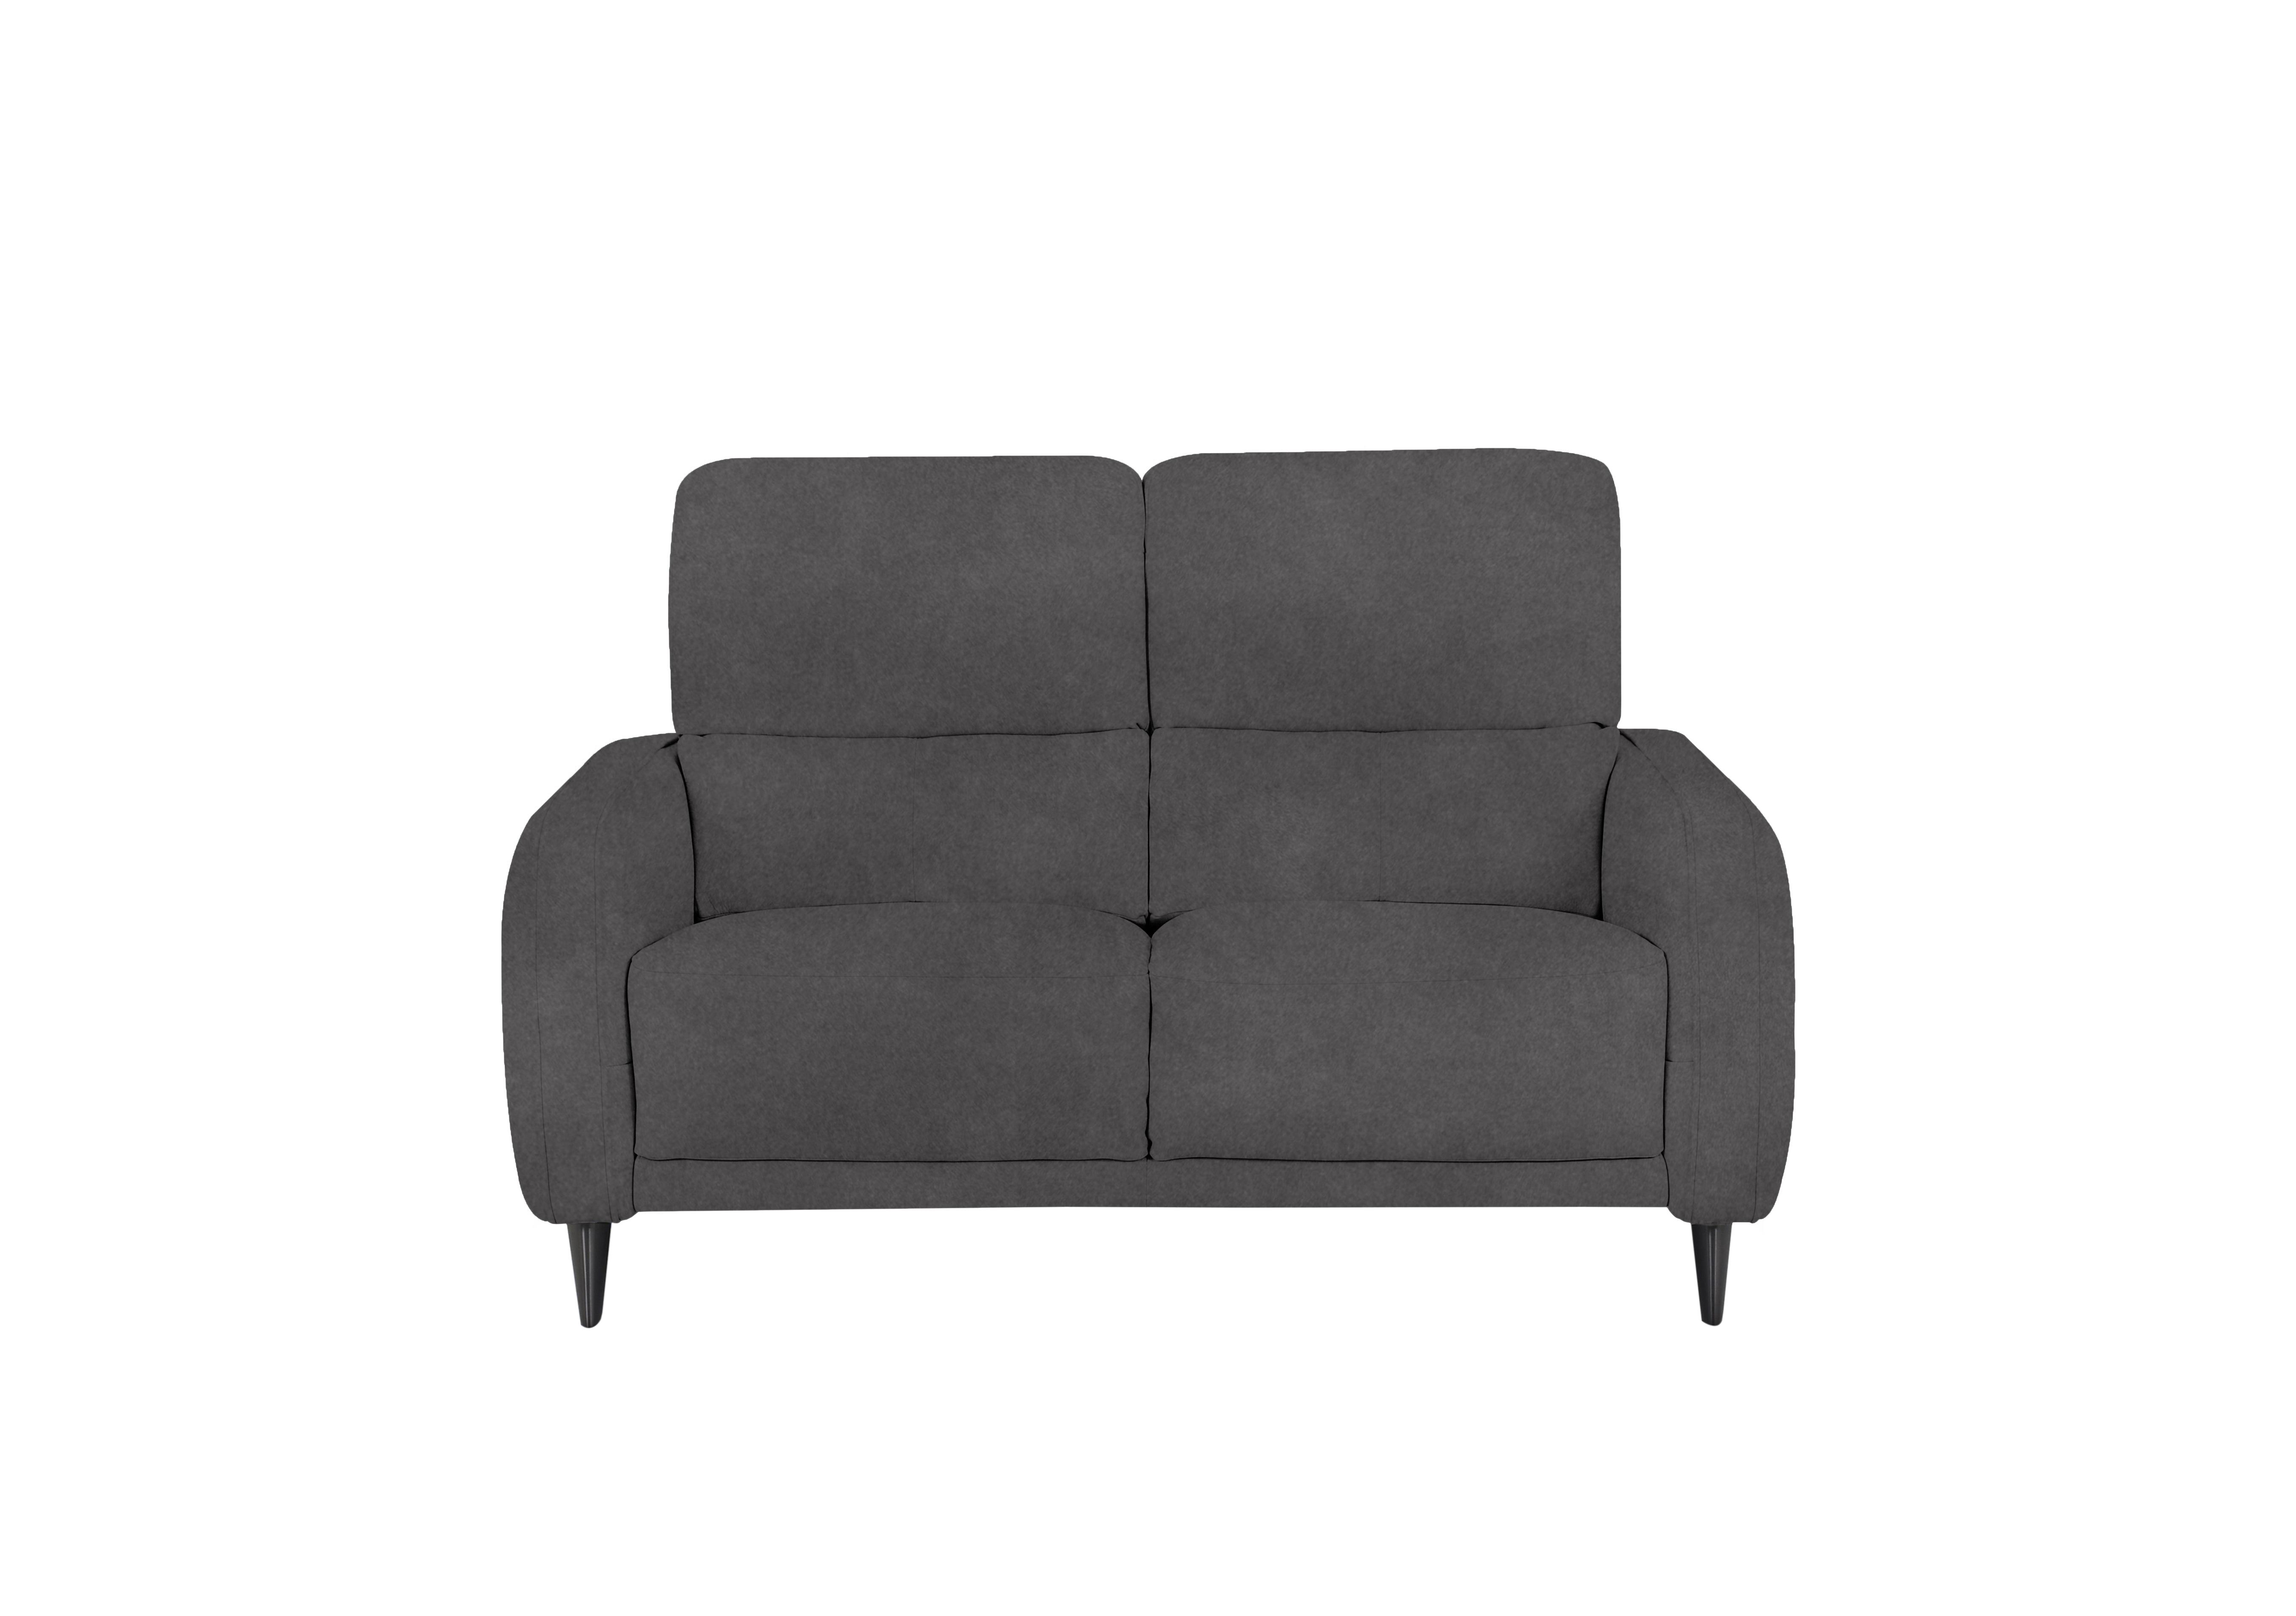 Logan 2 Seater Fabric Sofa in Fab-Meg-R20 Pewter on Furniture Village